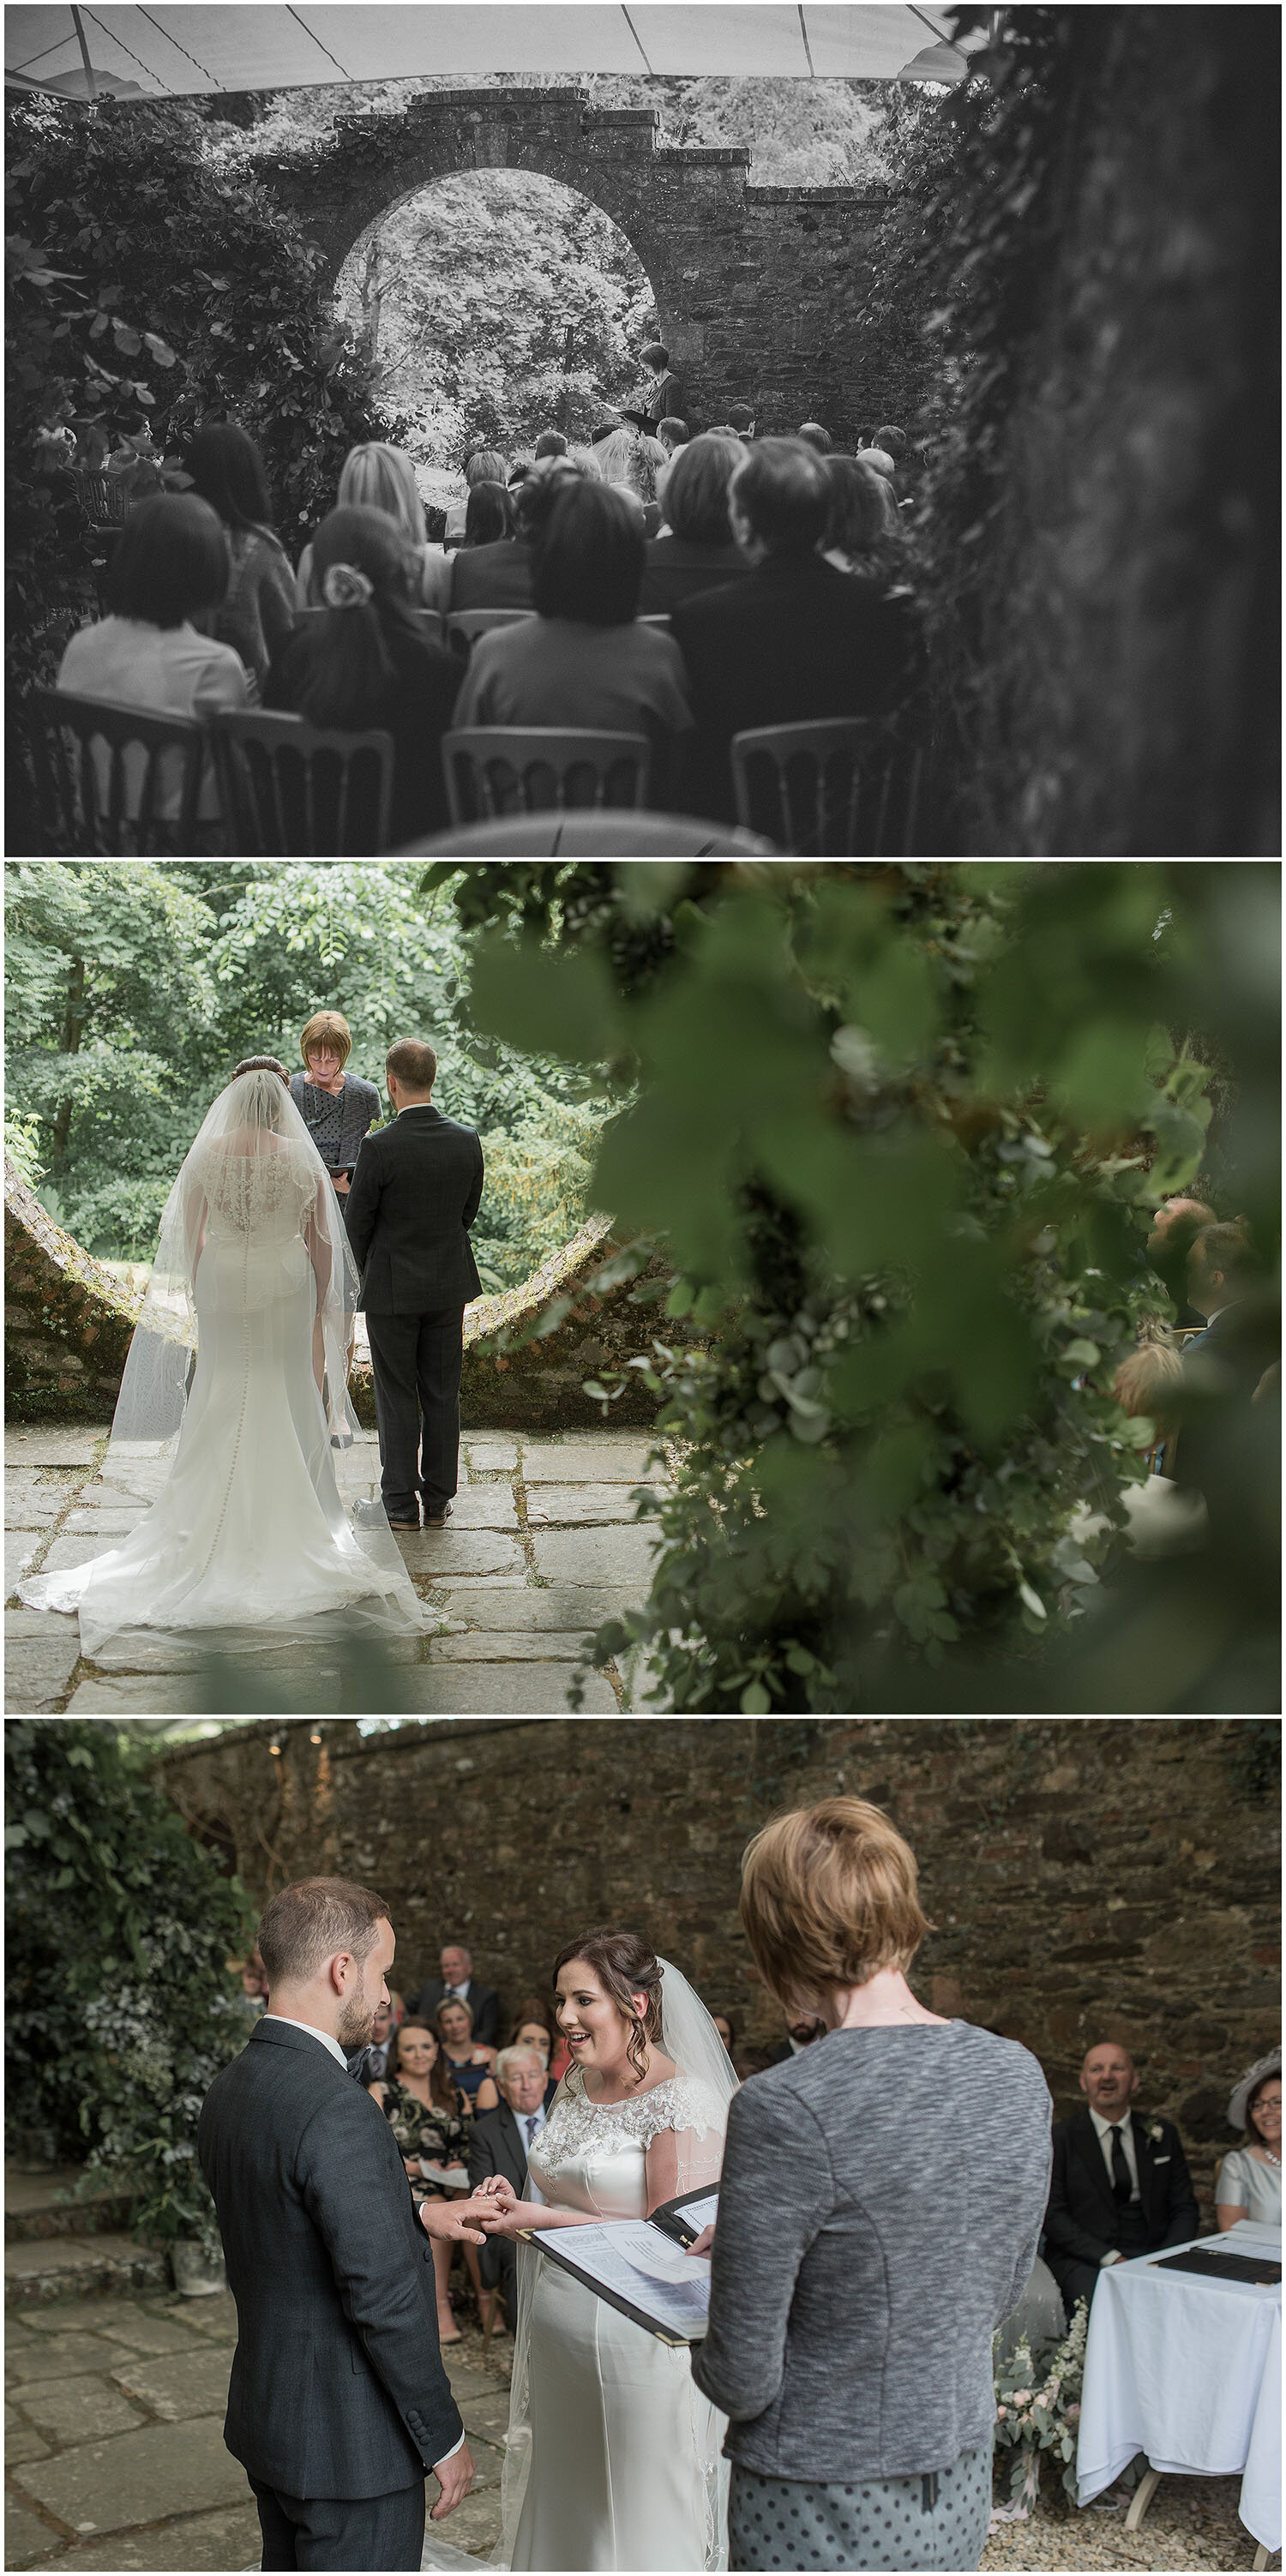 Drenagh House Wedding Pictures, Mark Barton Photography_0031.jpg